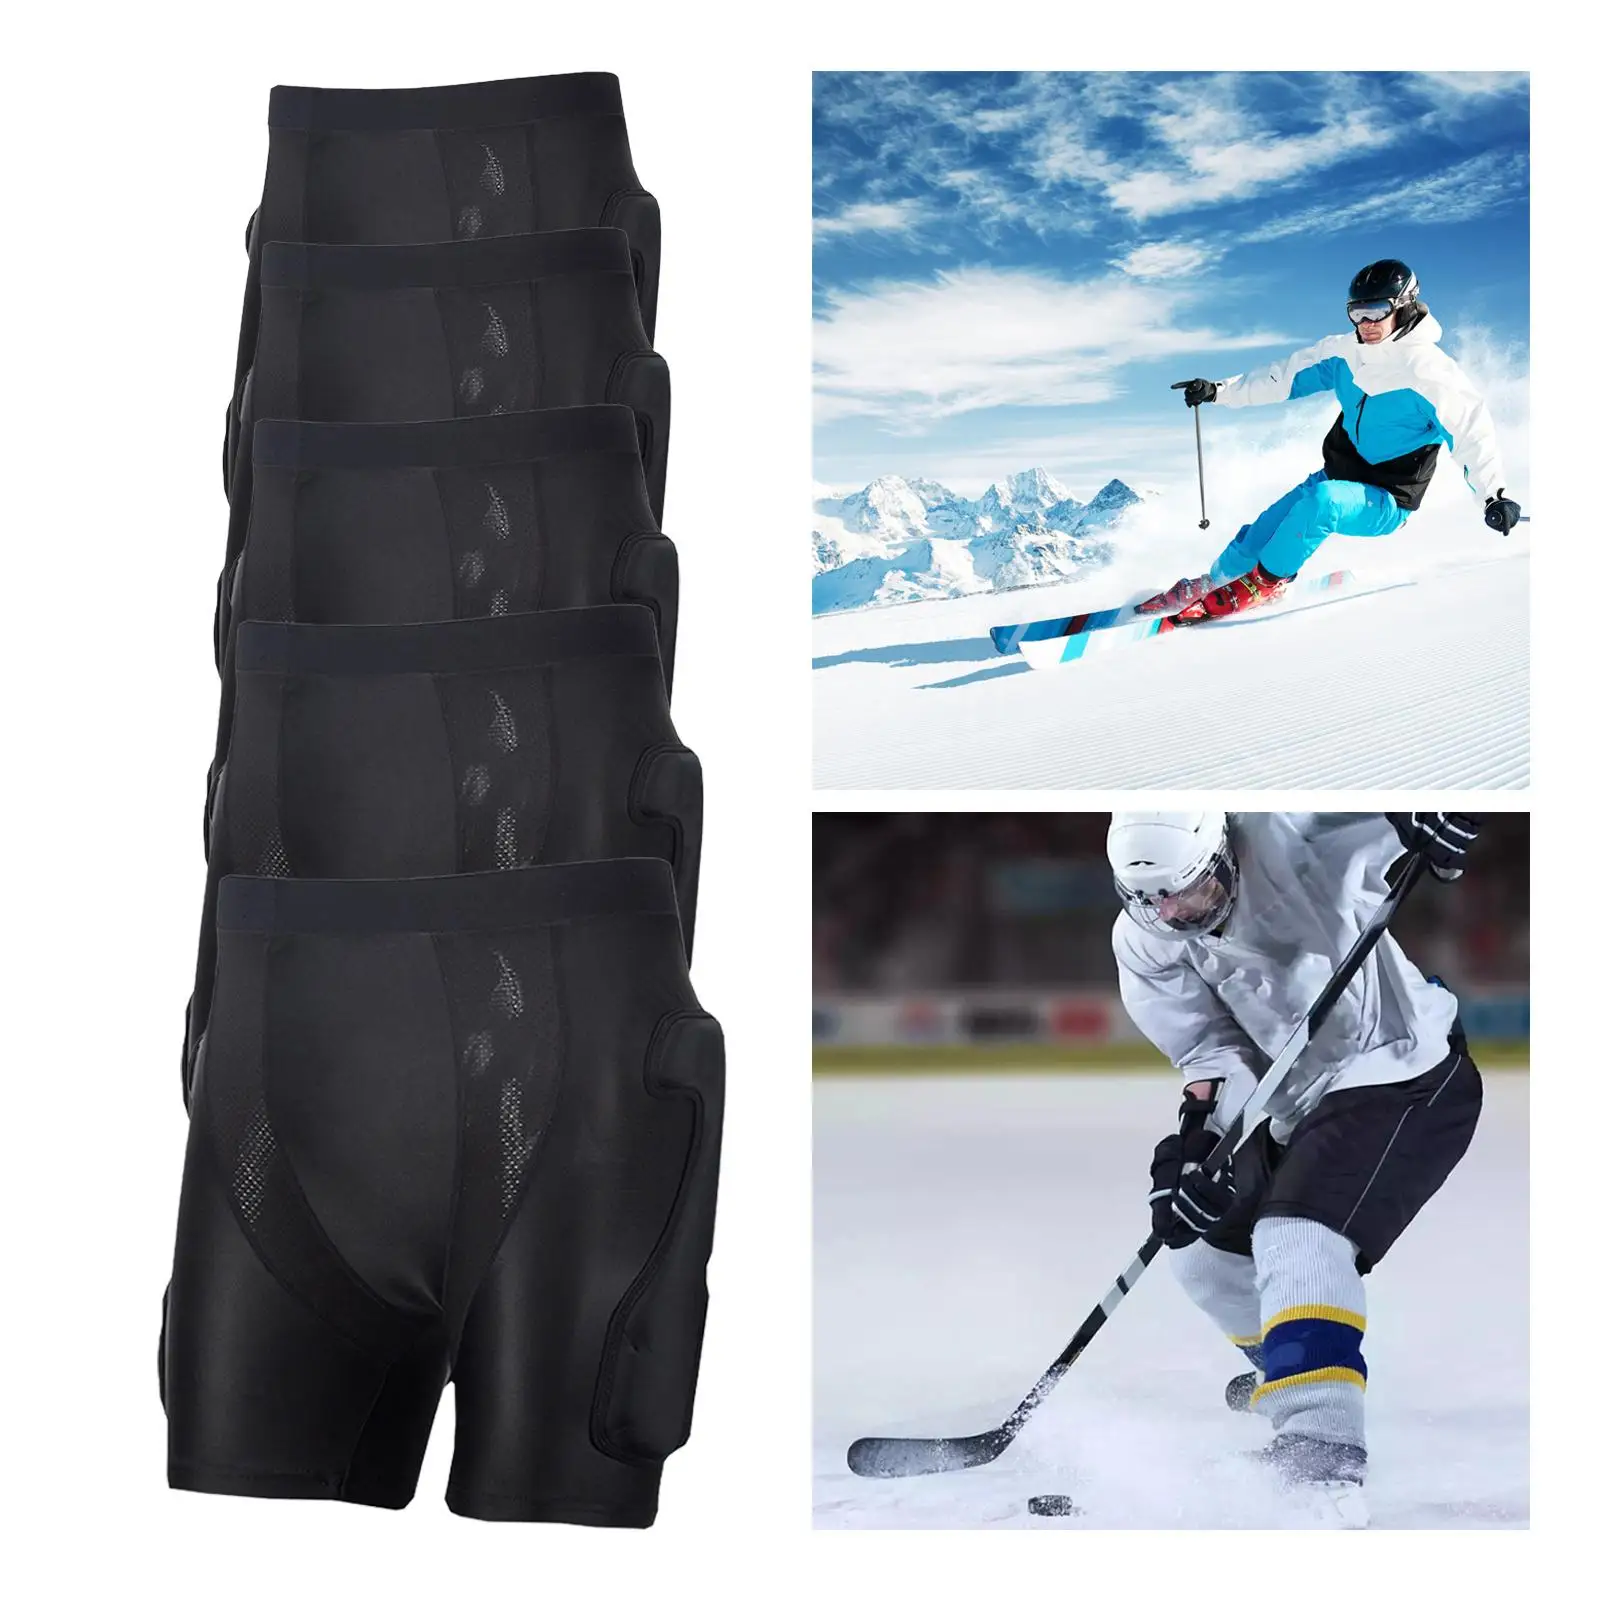 Padded Shorts Skating Impact Pad Breathable Tailbone Protection Protector for Outdoor Sports Ski Snowboarding Skating Skateboard